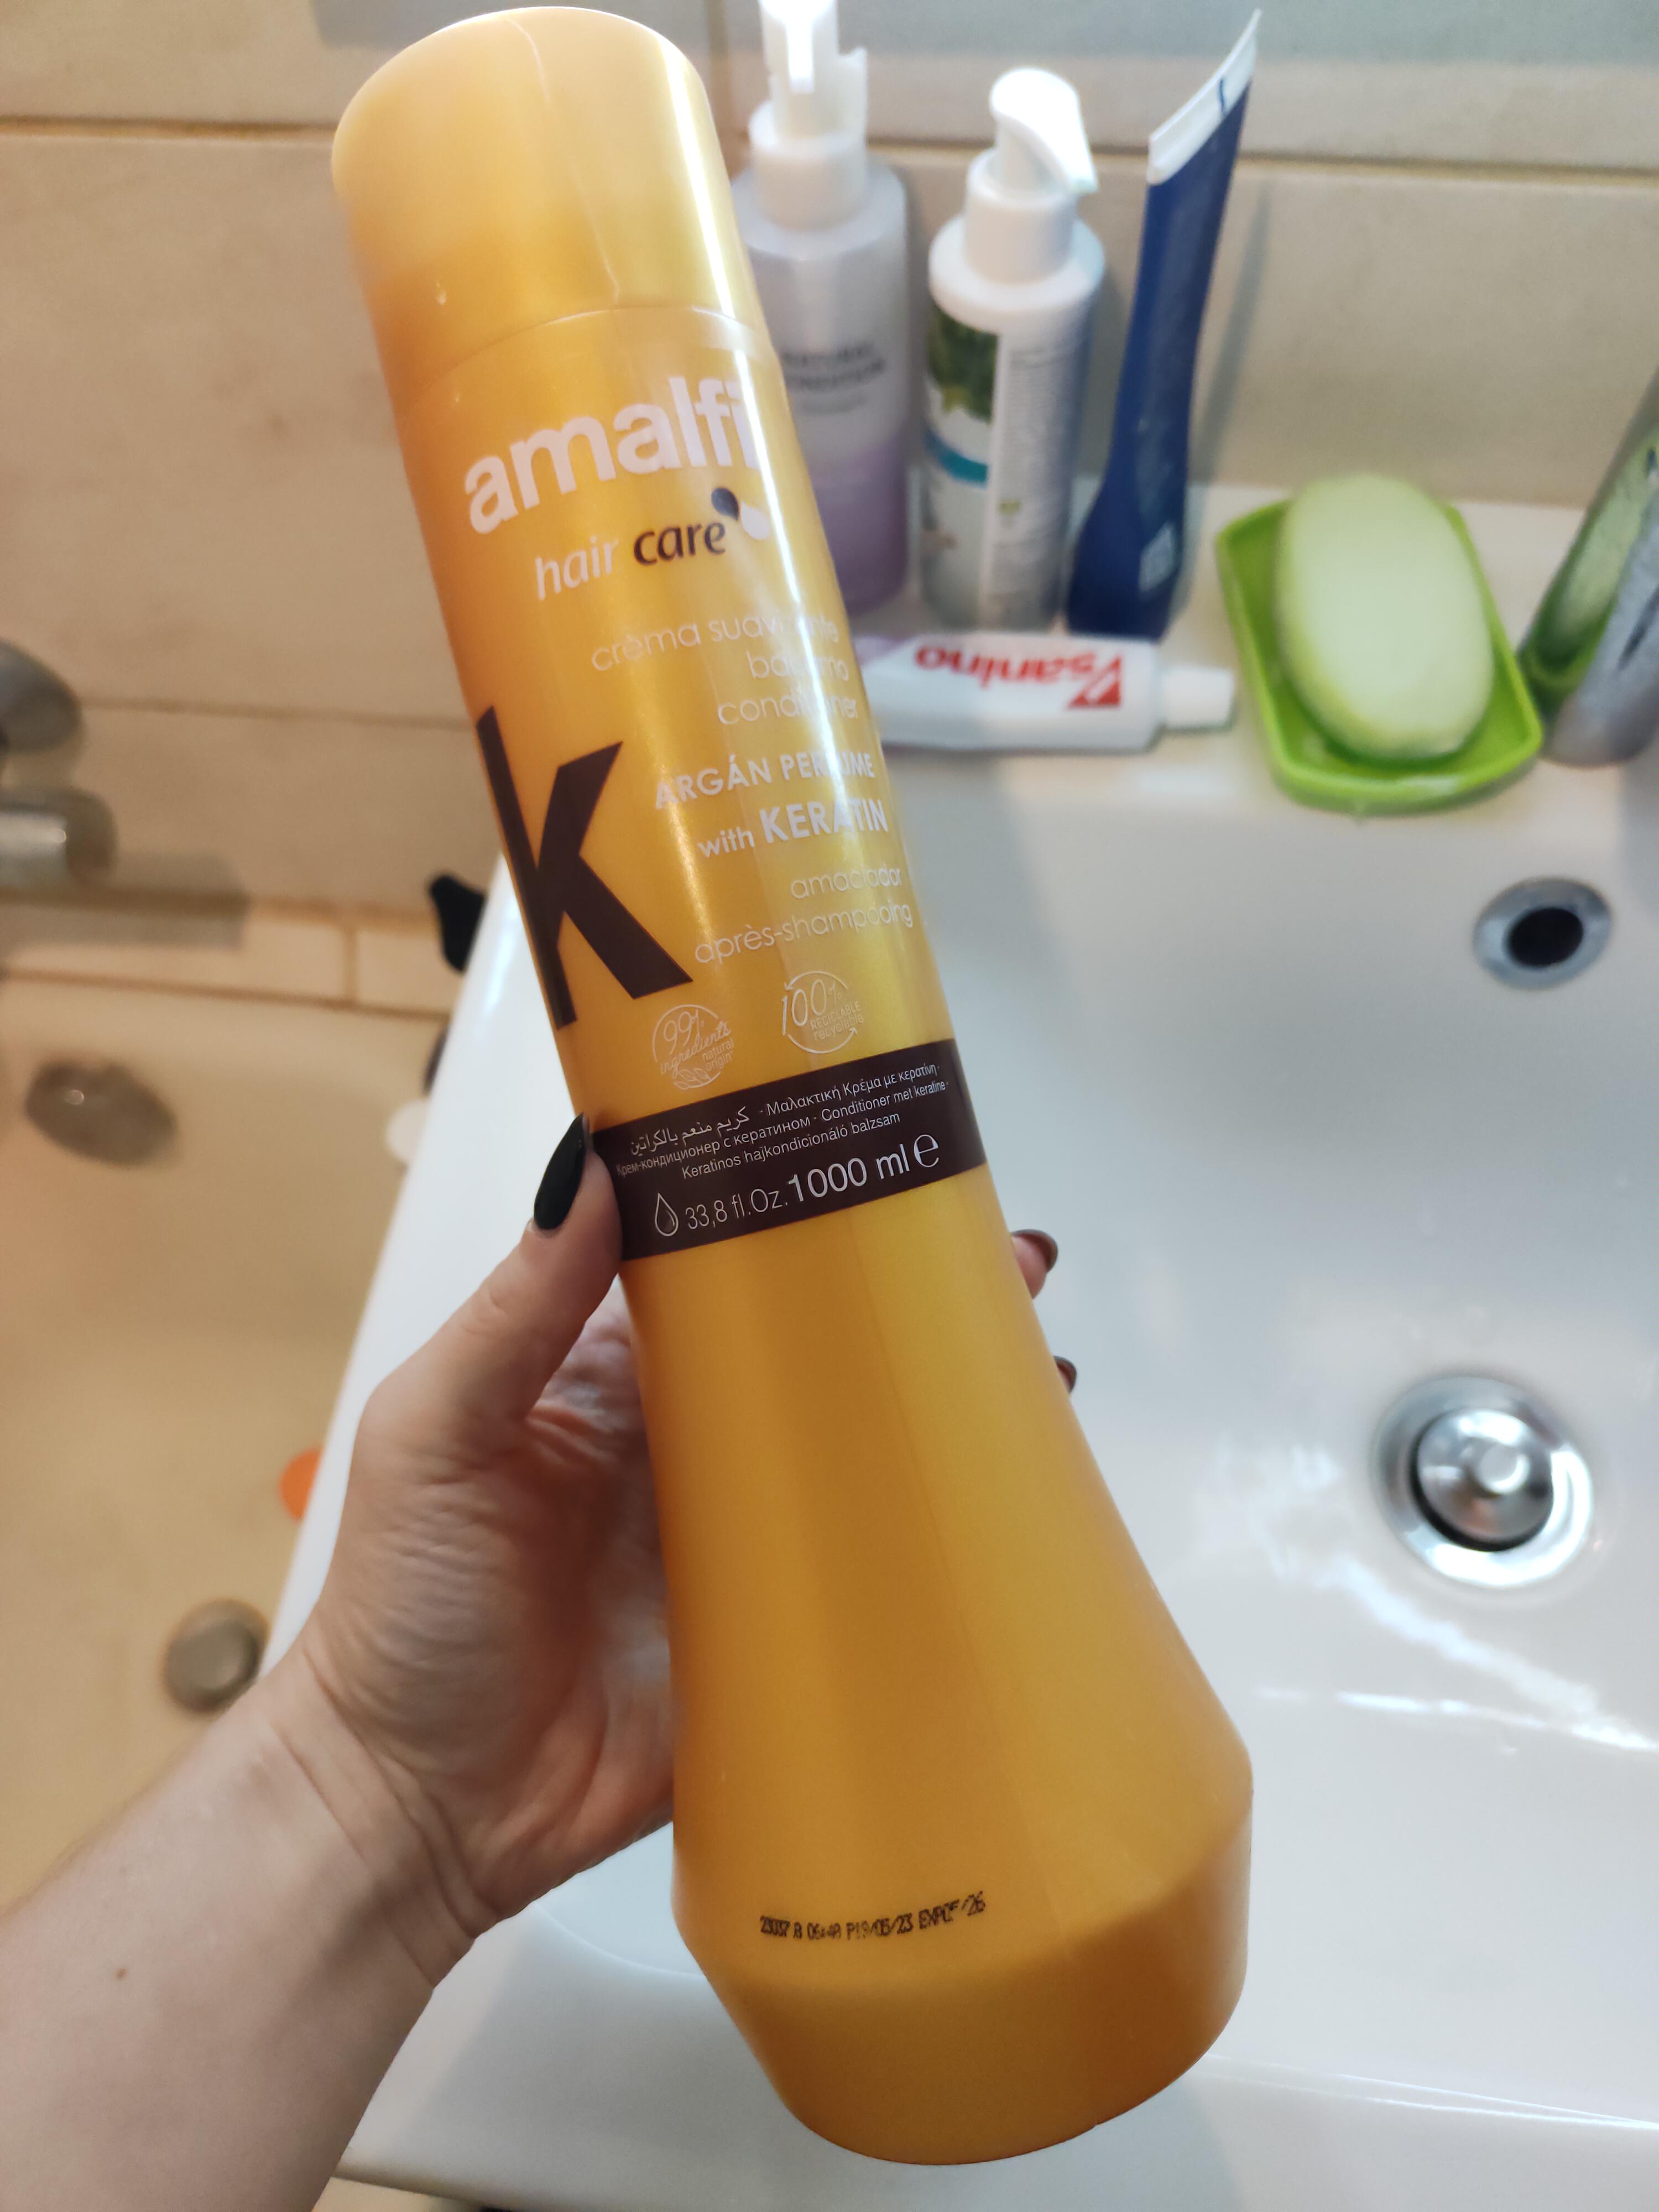 Amalfi Argan Keratin Hair Conditioner